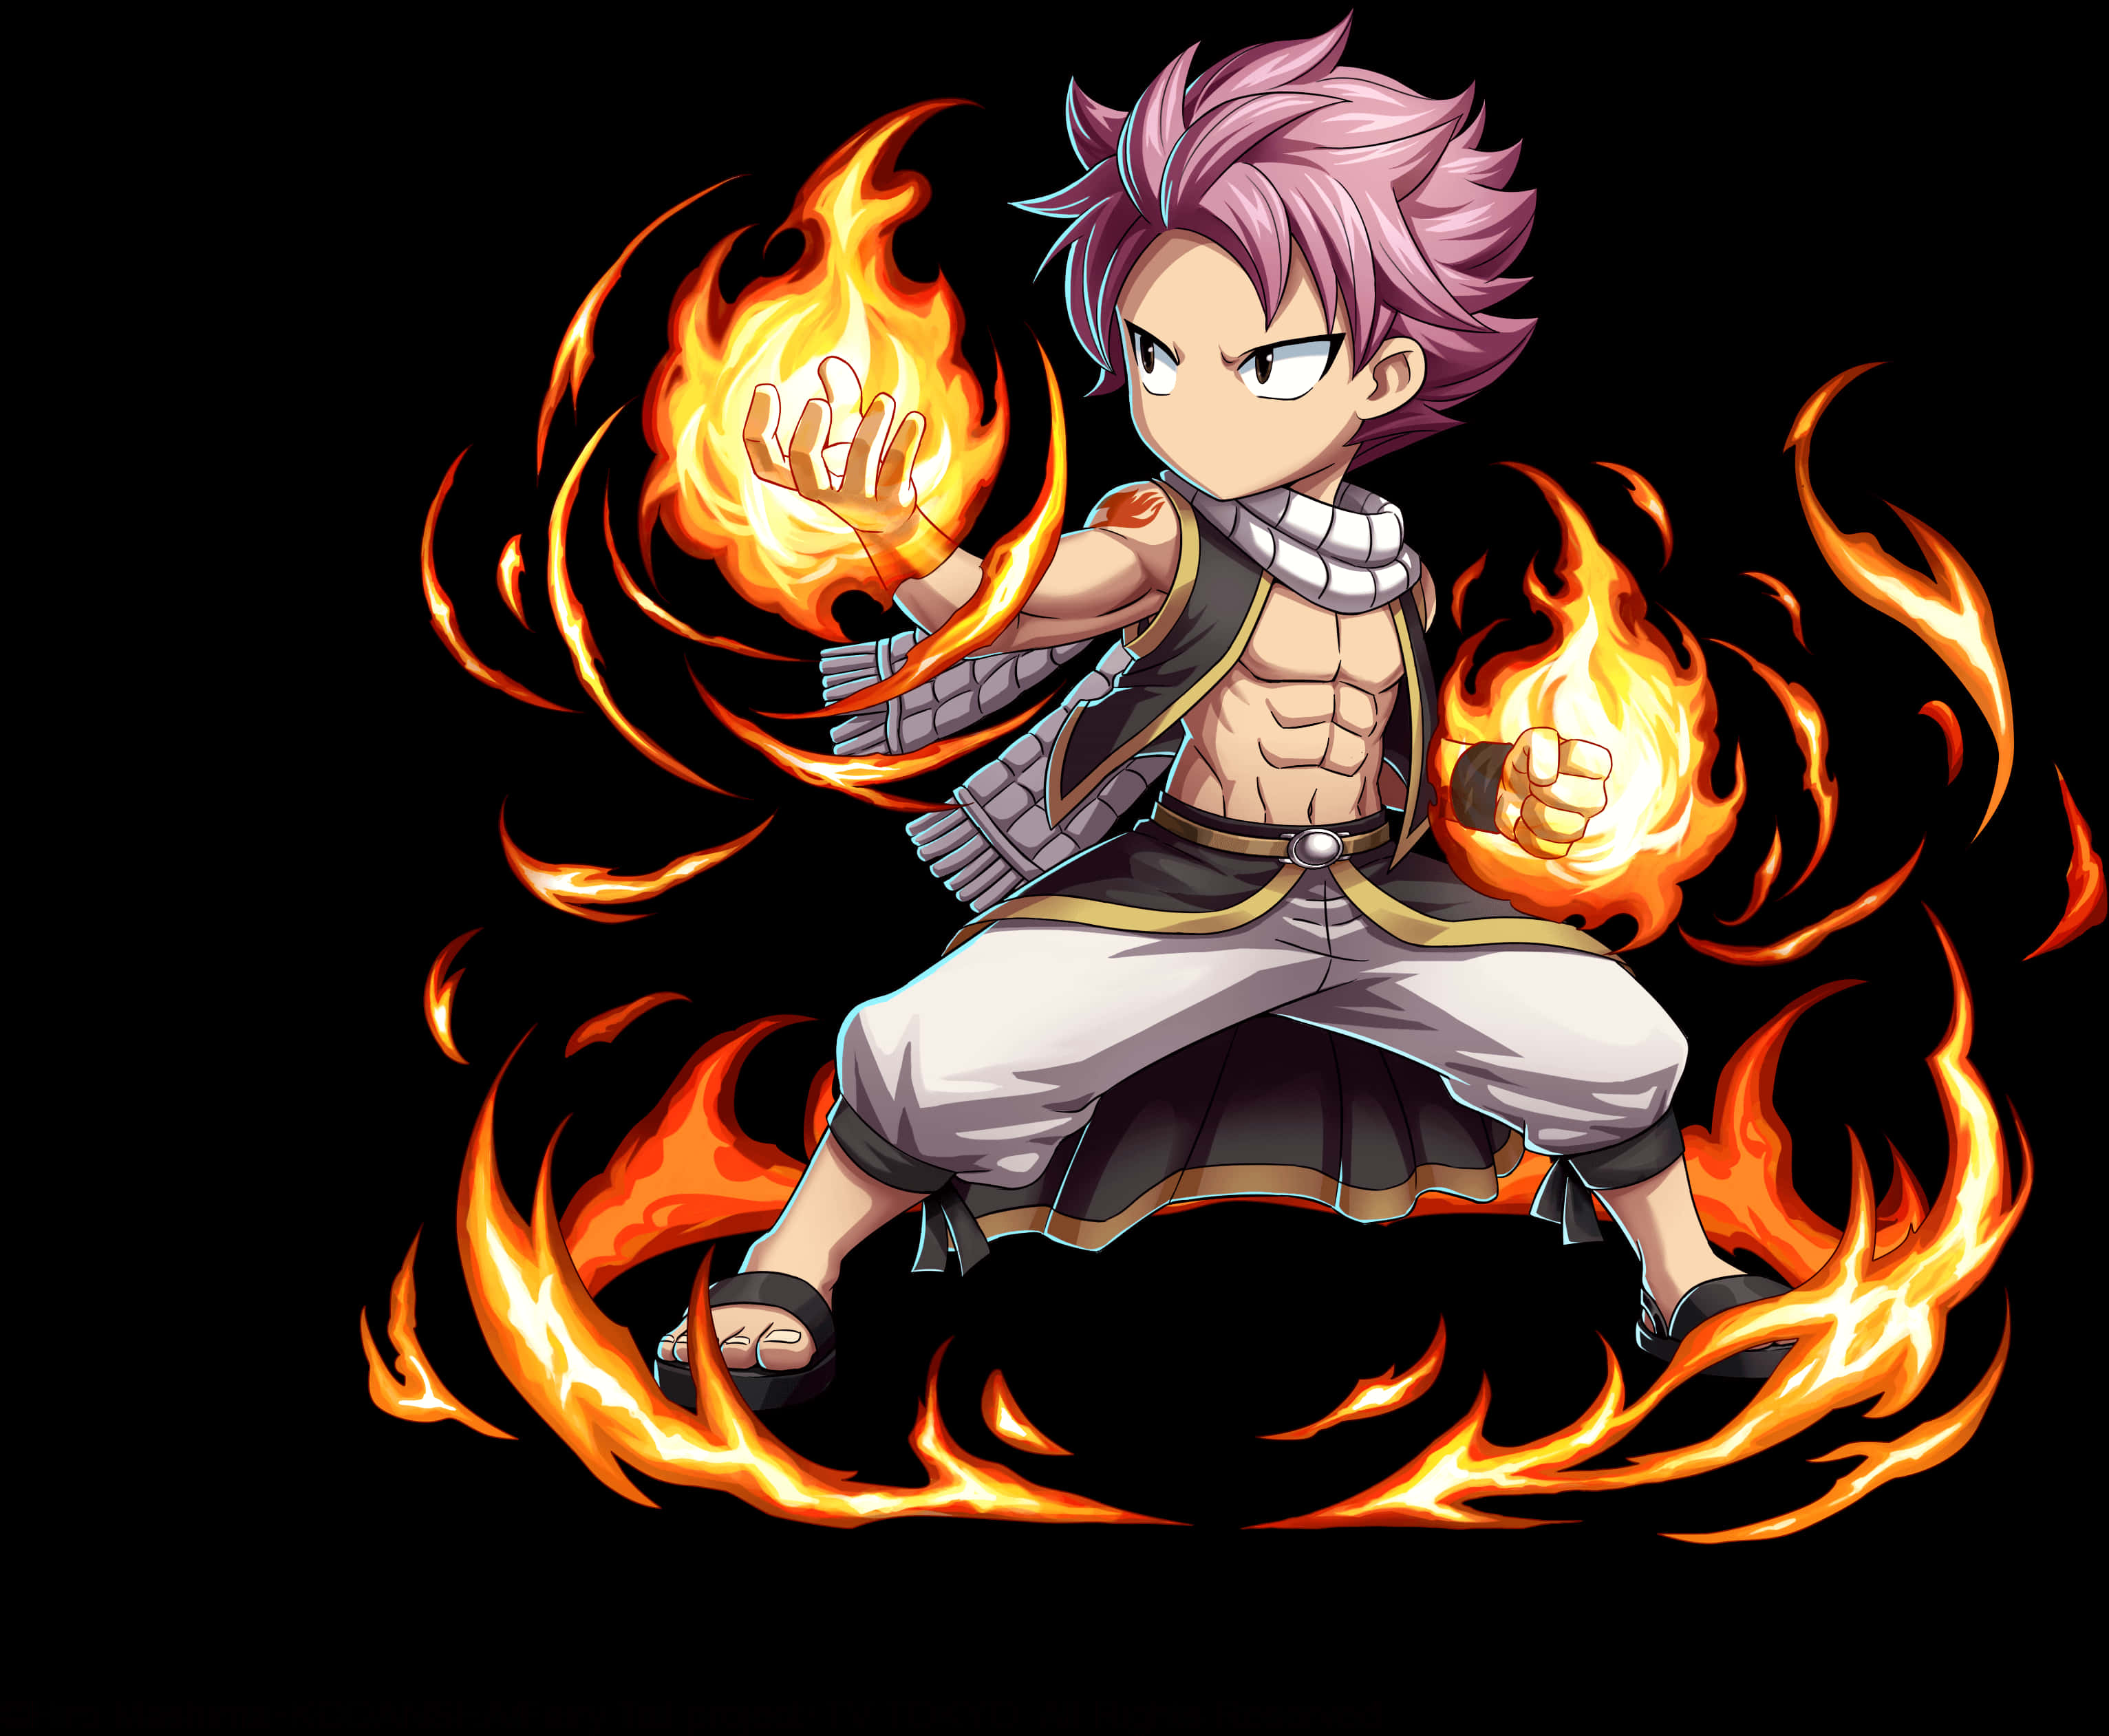 Fire Wielding Anime Character